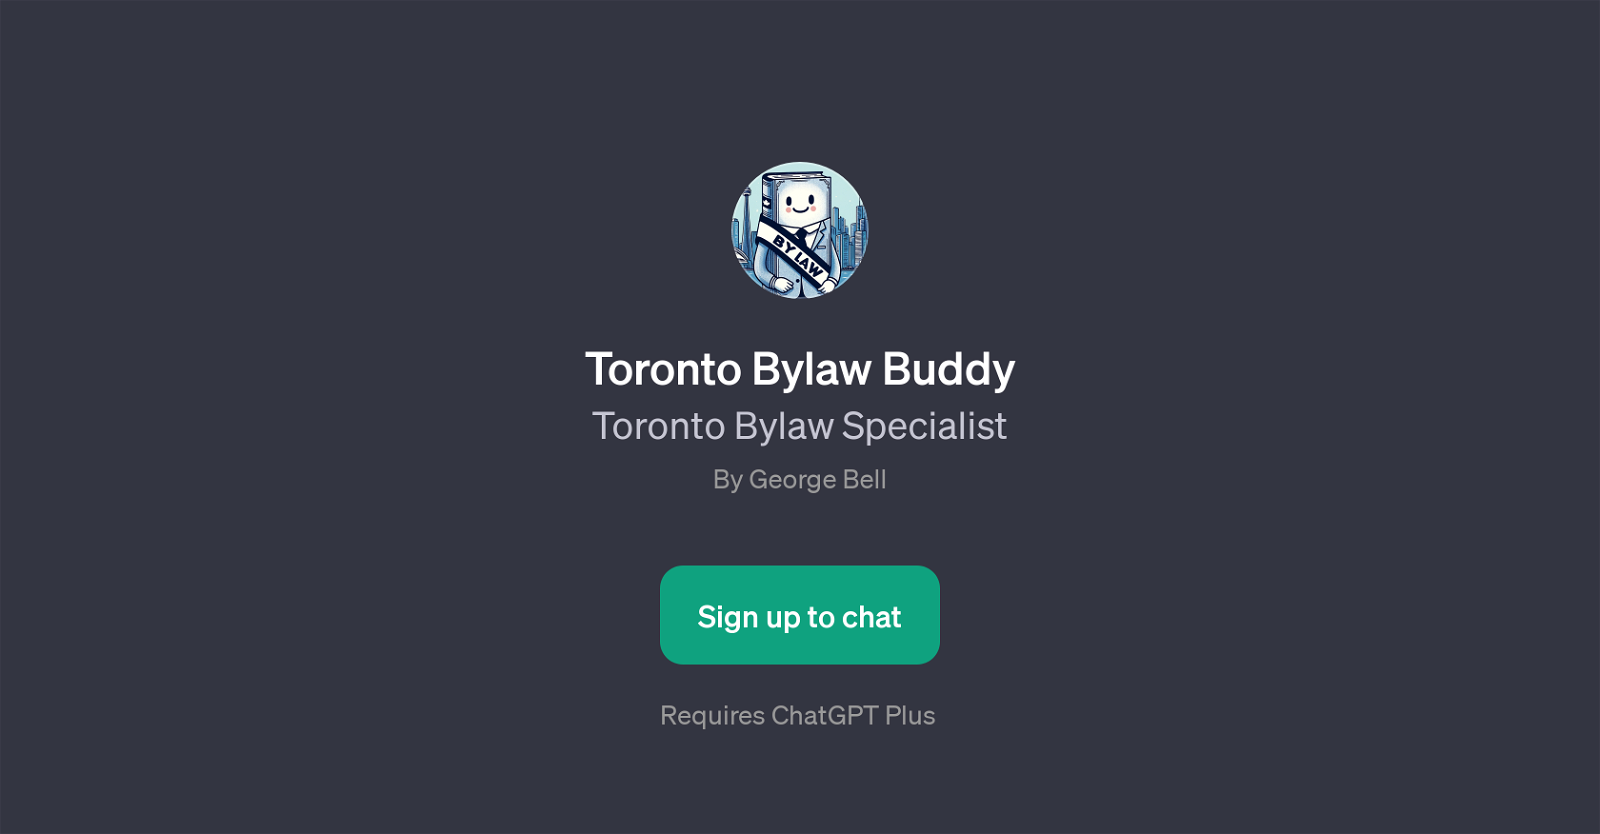 Toronto Bylaw Buddy website